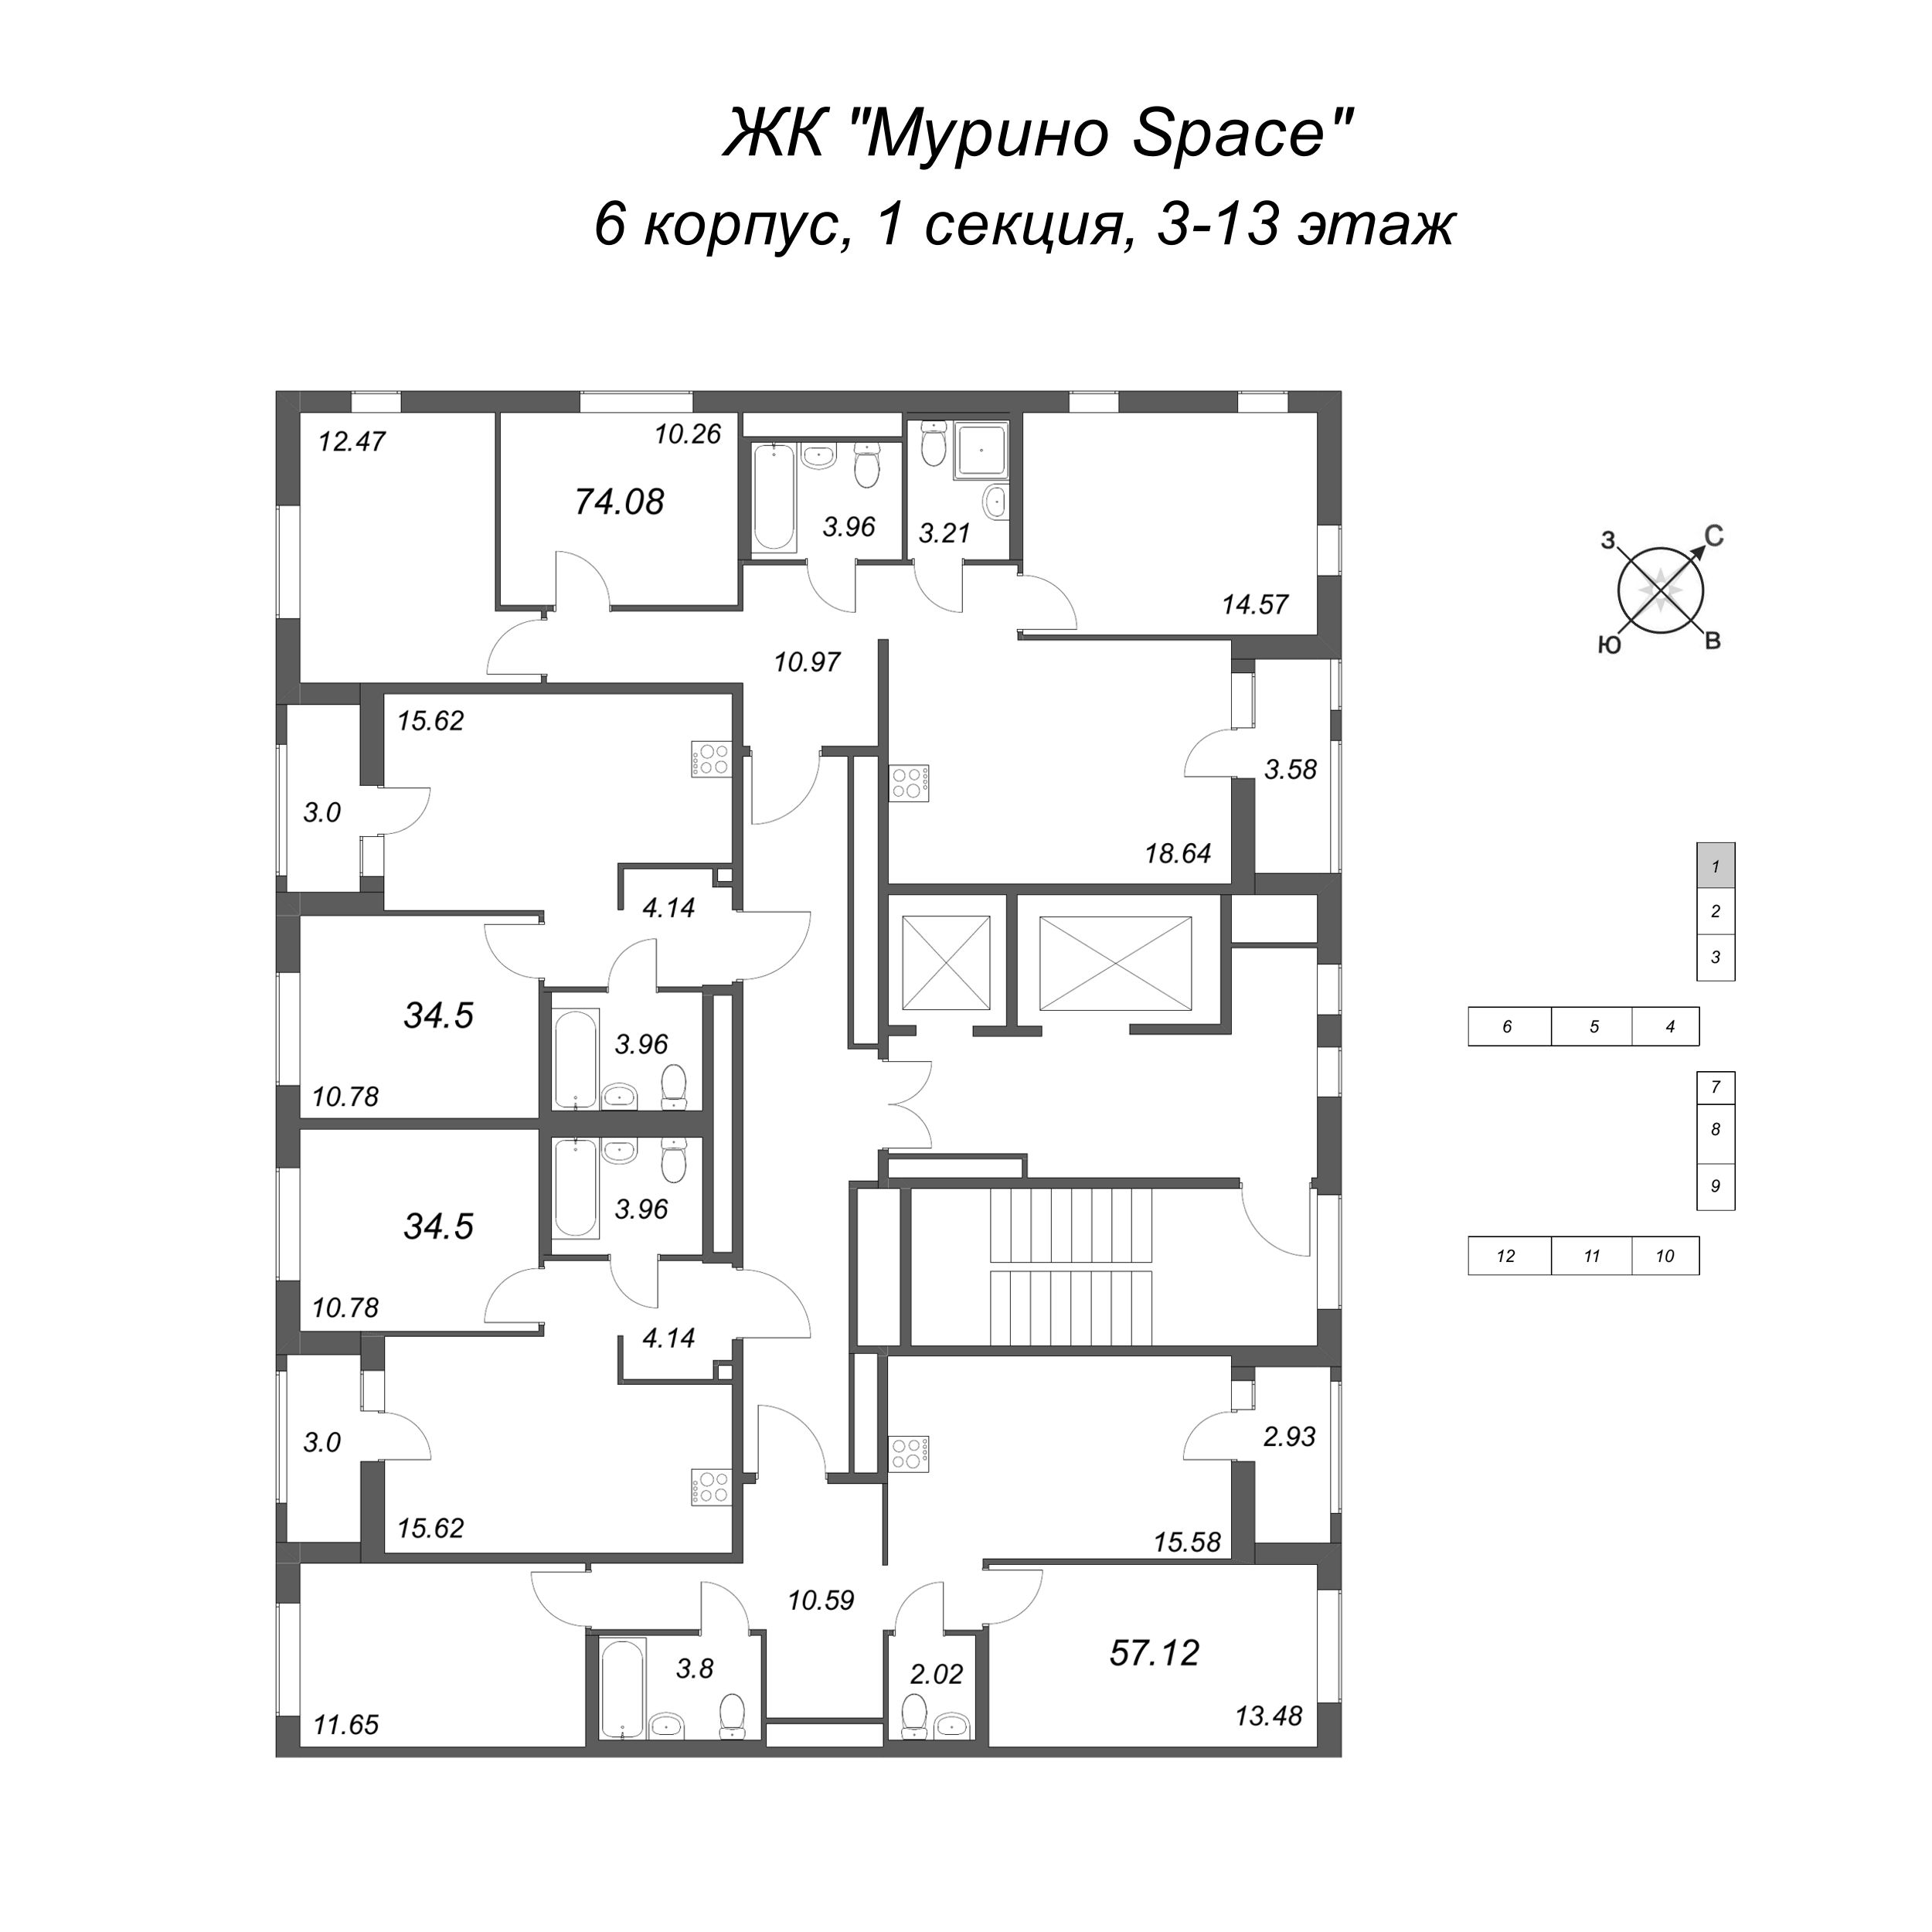 3-комнатная (Евро) квартира, 57.12 м² в ЖК "Мурино Space" - планировка этажа